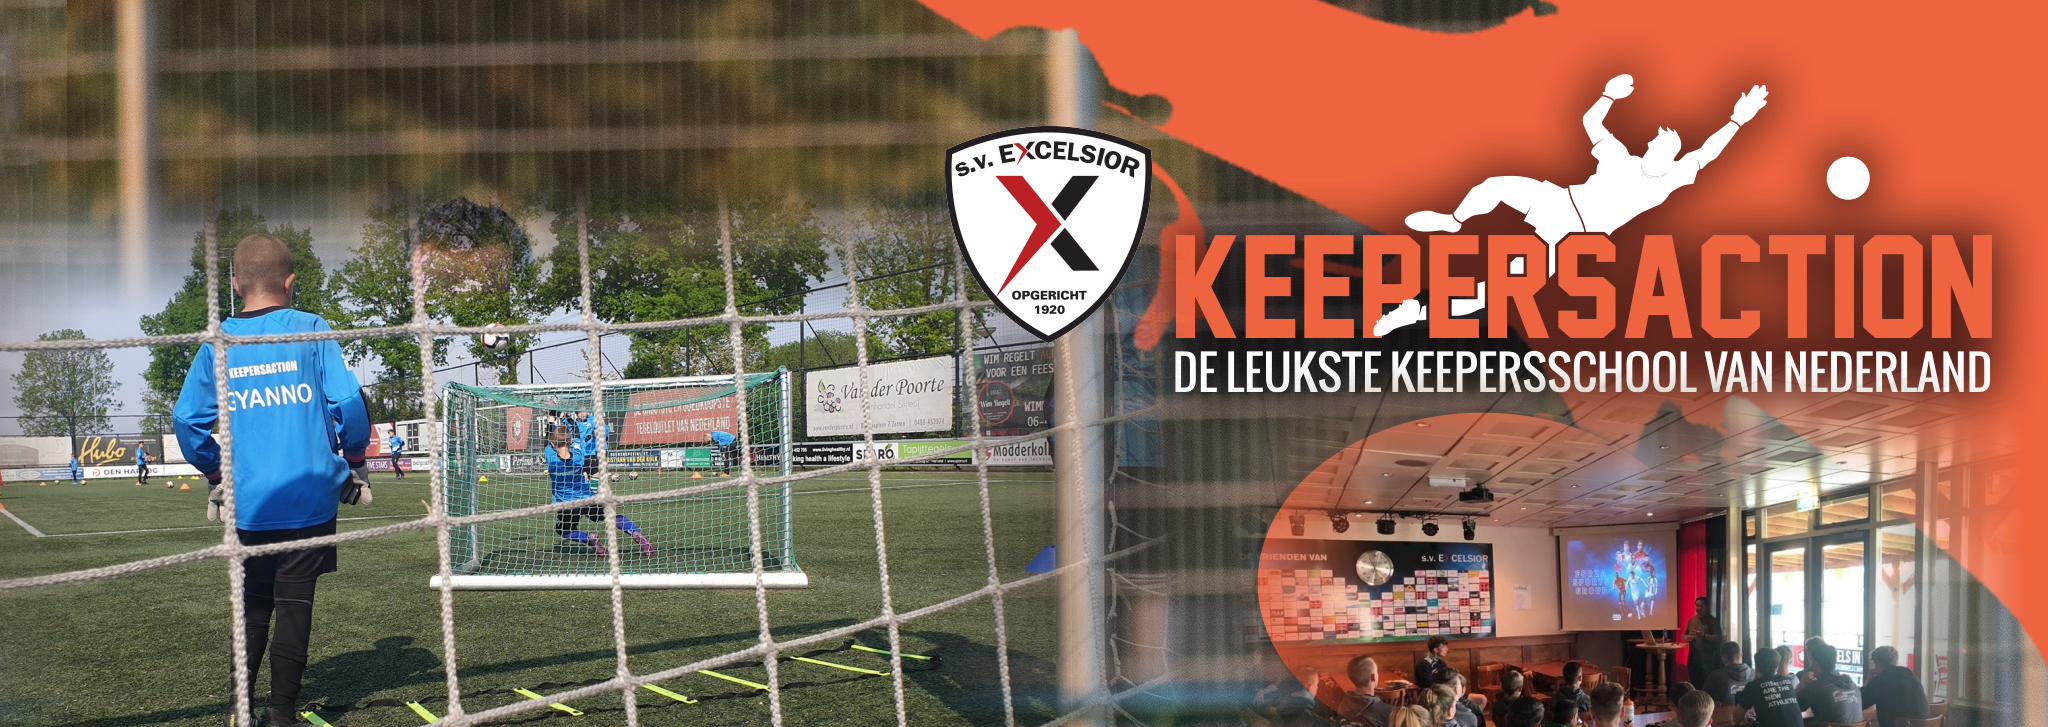 Keepersschool Keepersaction in Zetten (Regio Nijmegen)